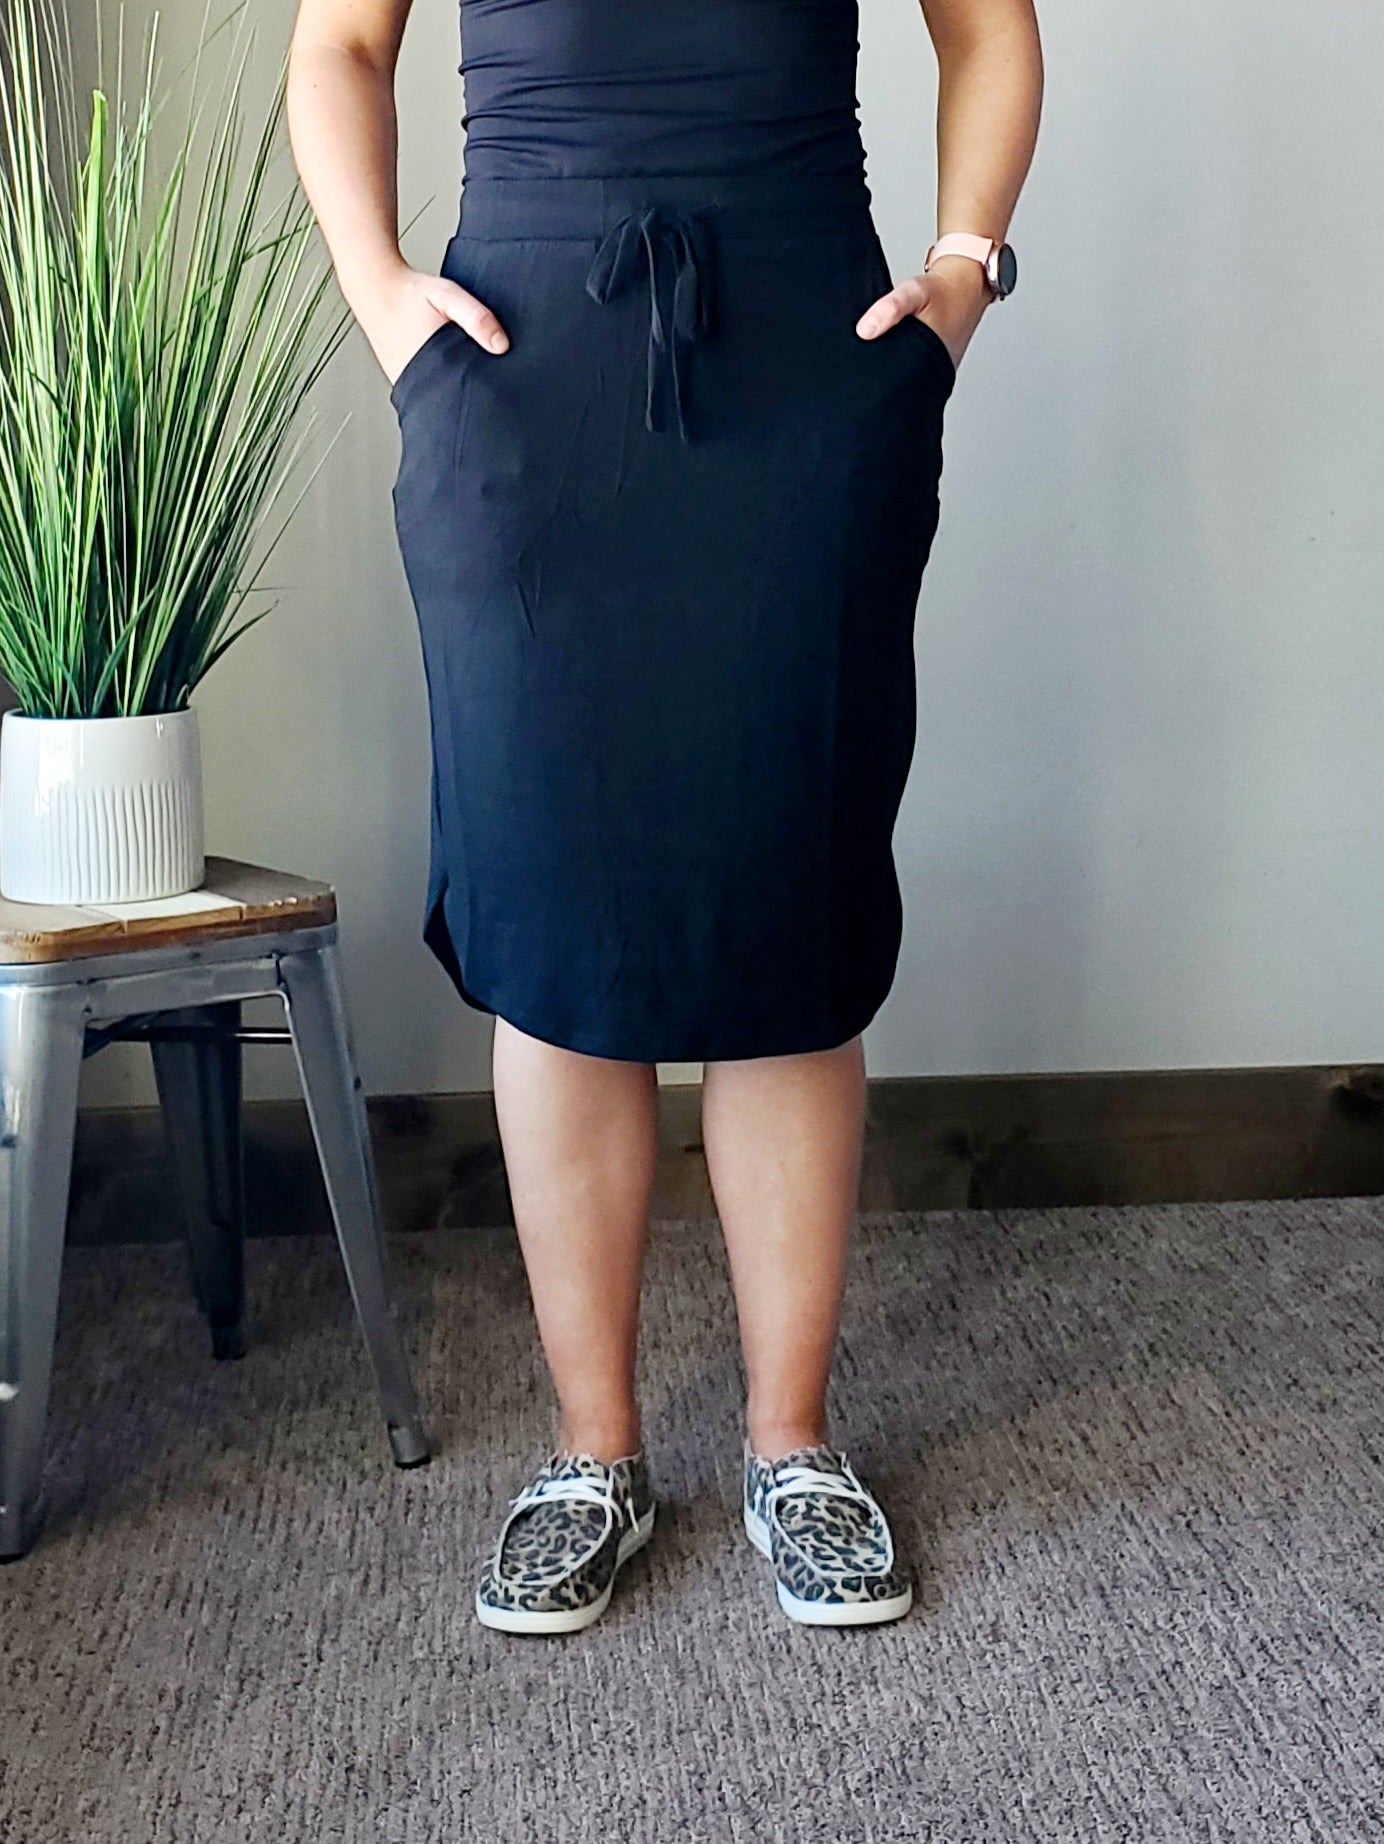 Black Elastic Waist Self Tie Hi-Low Hem Pocket Midi Skirt Classy Closet Modest CLothing Boutique Near Me for Women